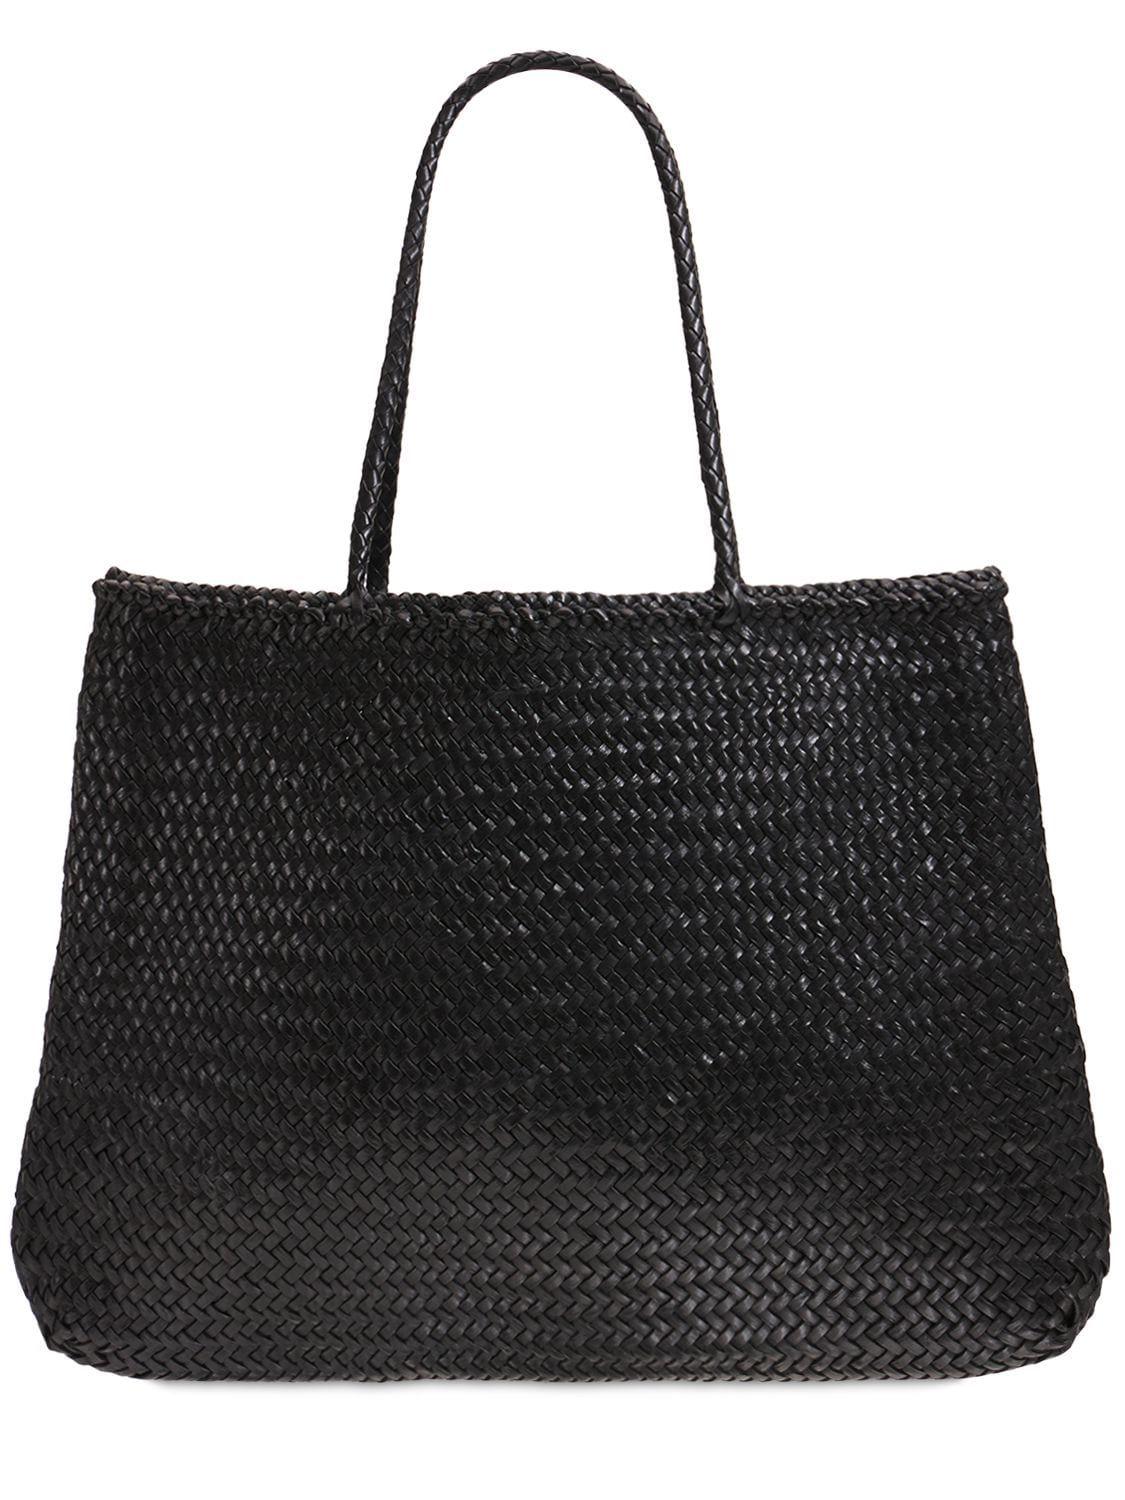 Dragon Diffusion Sophie Large Leather Shoulder Bag in Black | Lyst